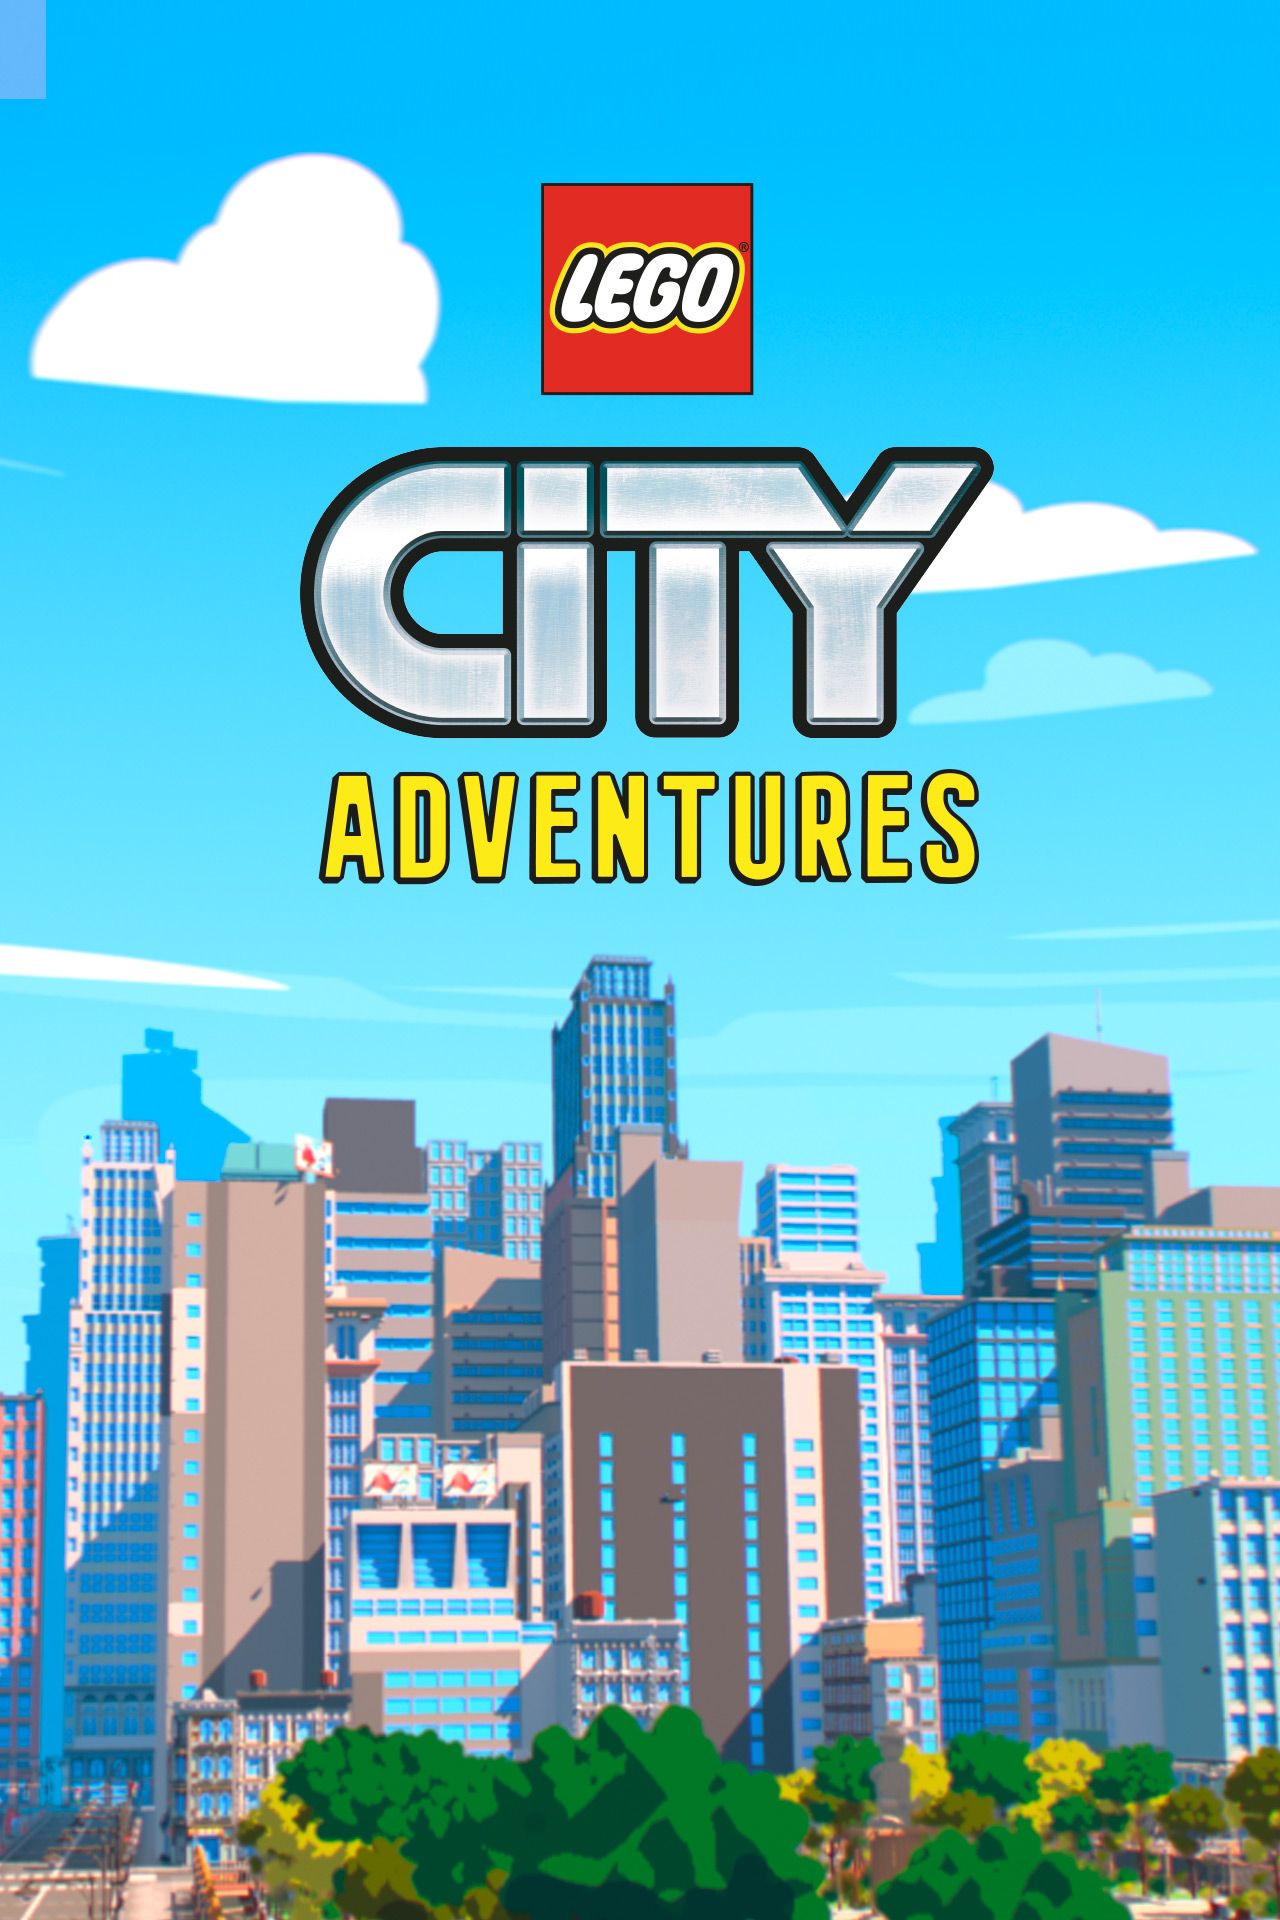 LEGO City Adventures | Brickipedia | Fandom